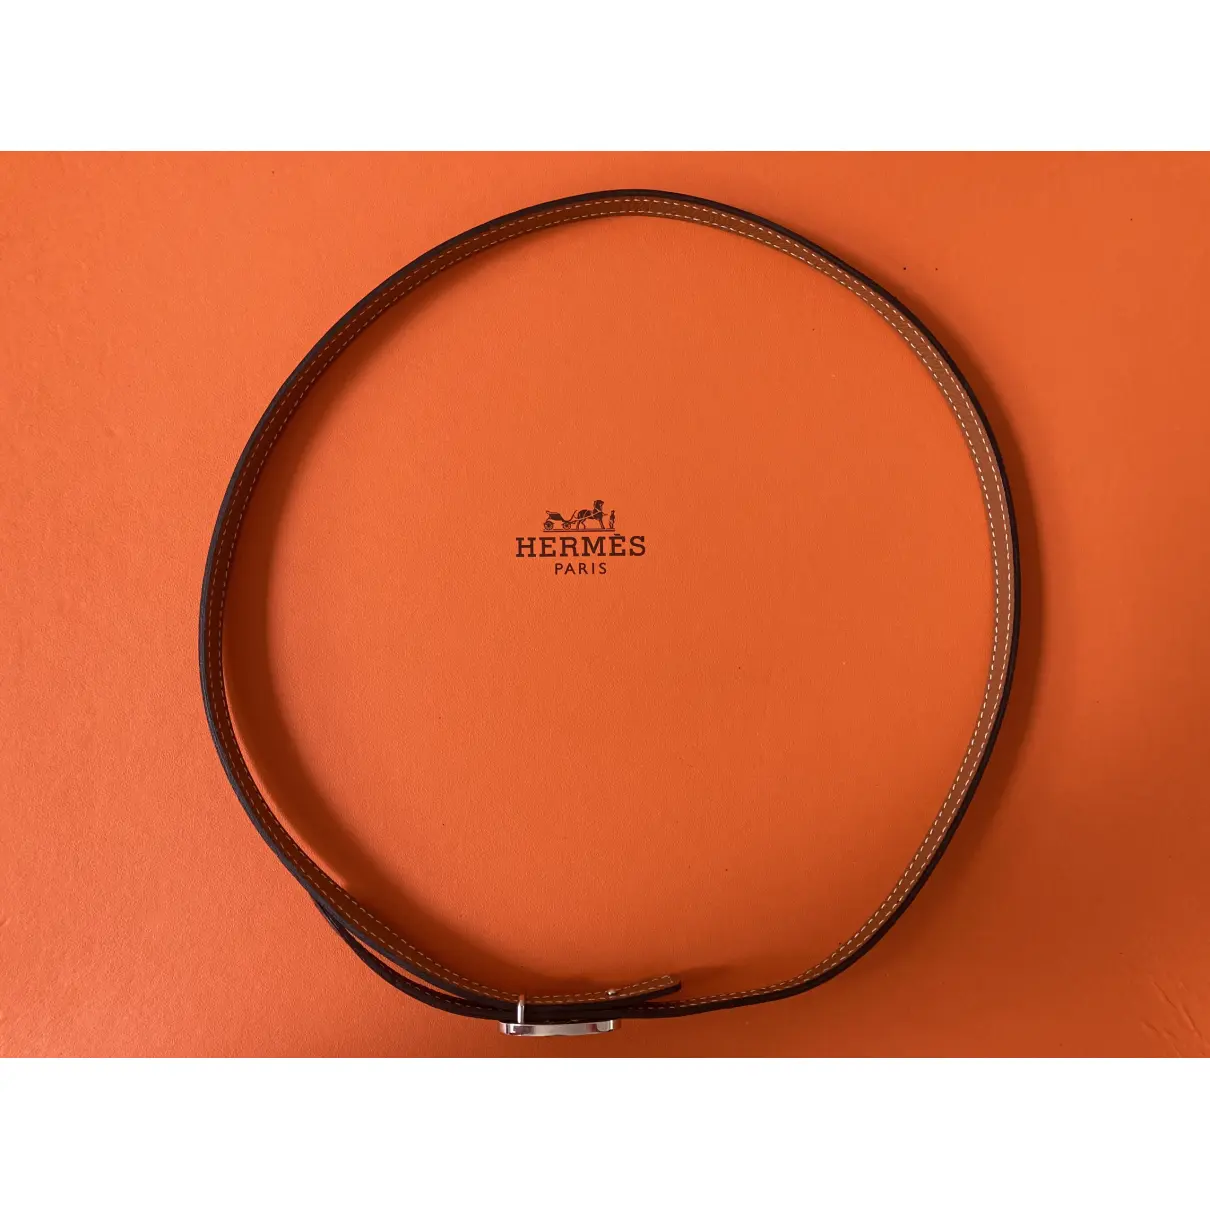 Buy Hermès Chaine d'Ancre leather belt online